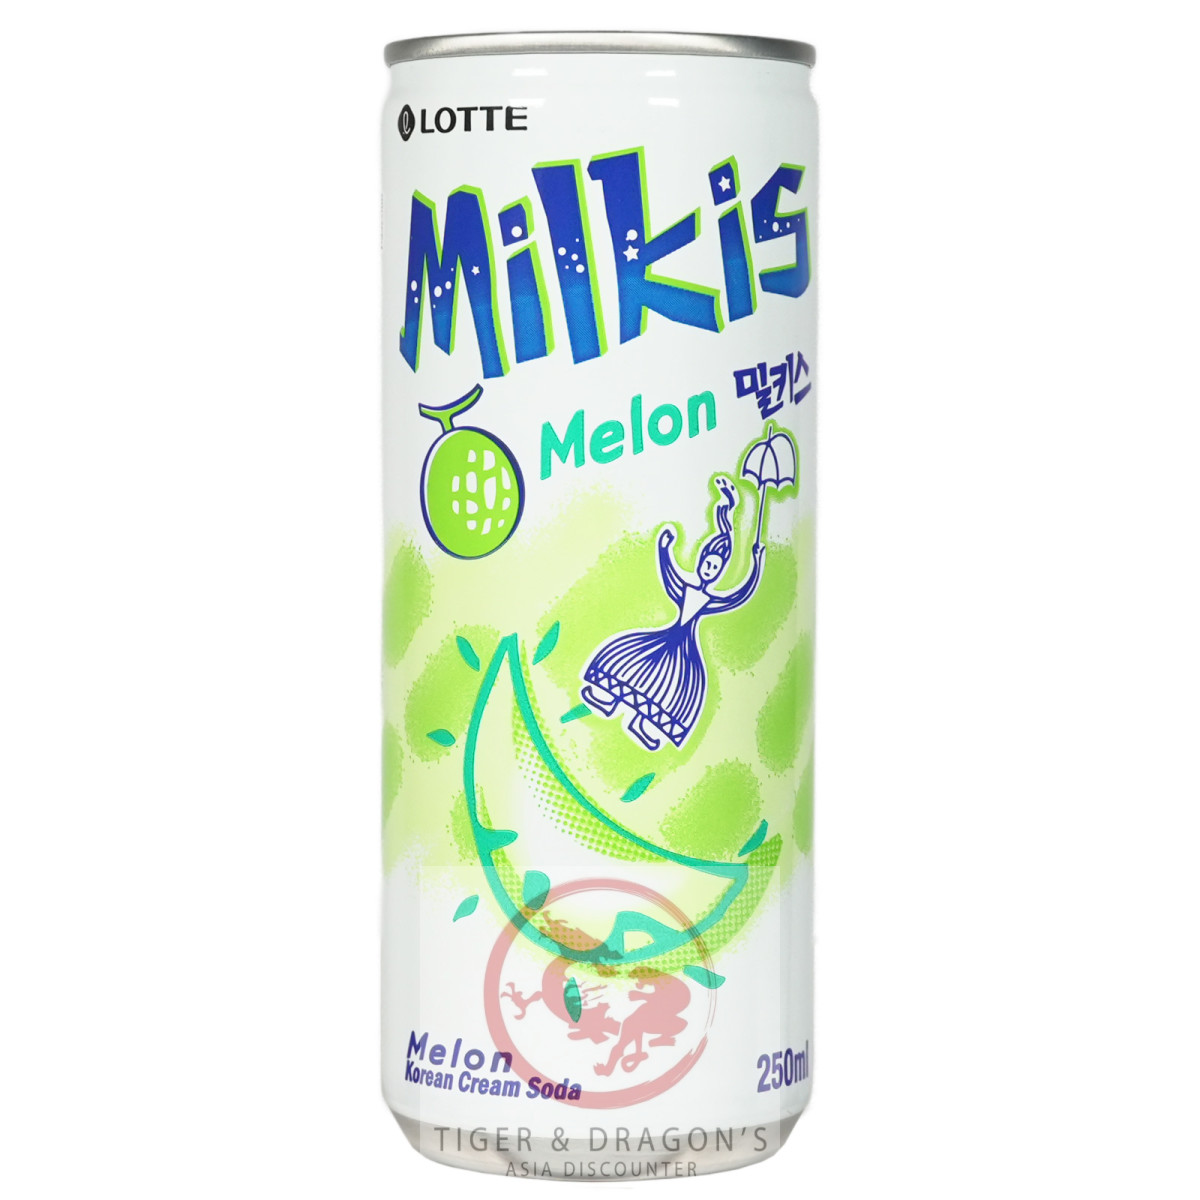 Lotte Milkis Melonen Geschmack 250ml zzgl. 0,25€ Pfand